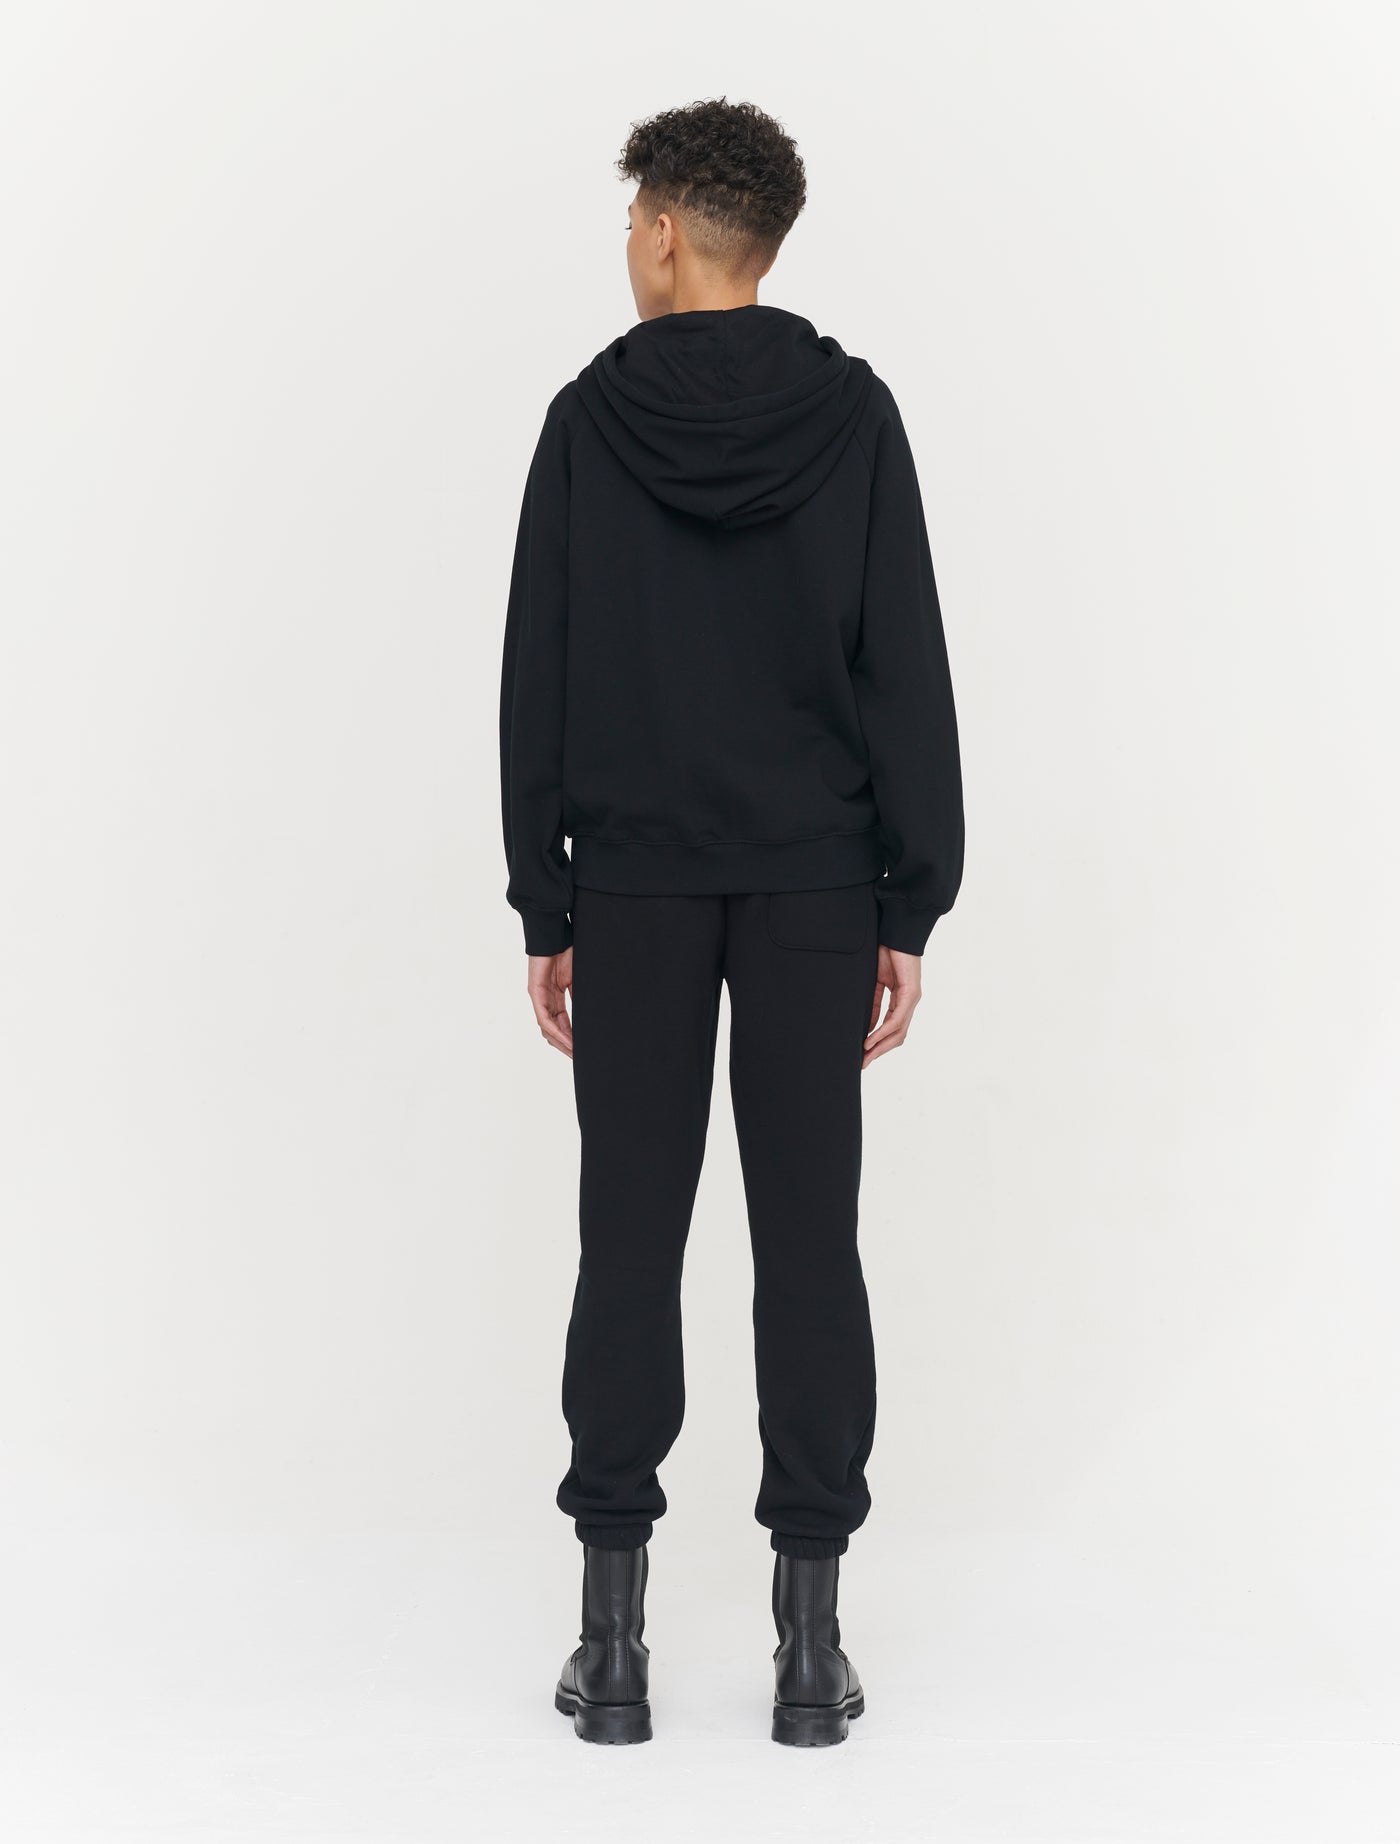 Black zip up hoodies